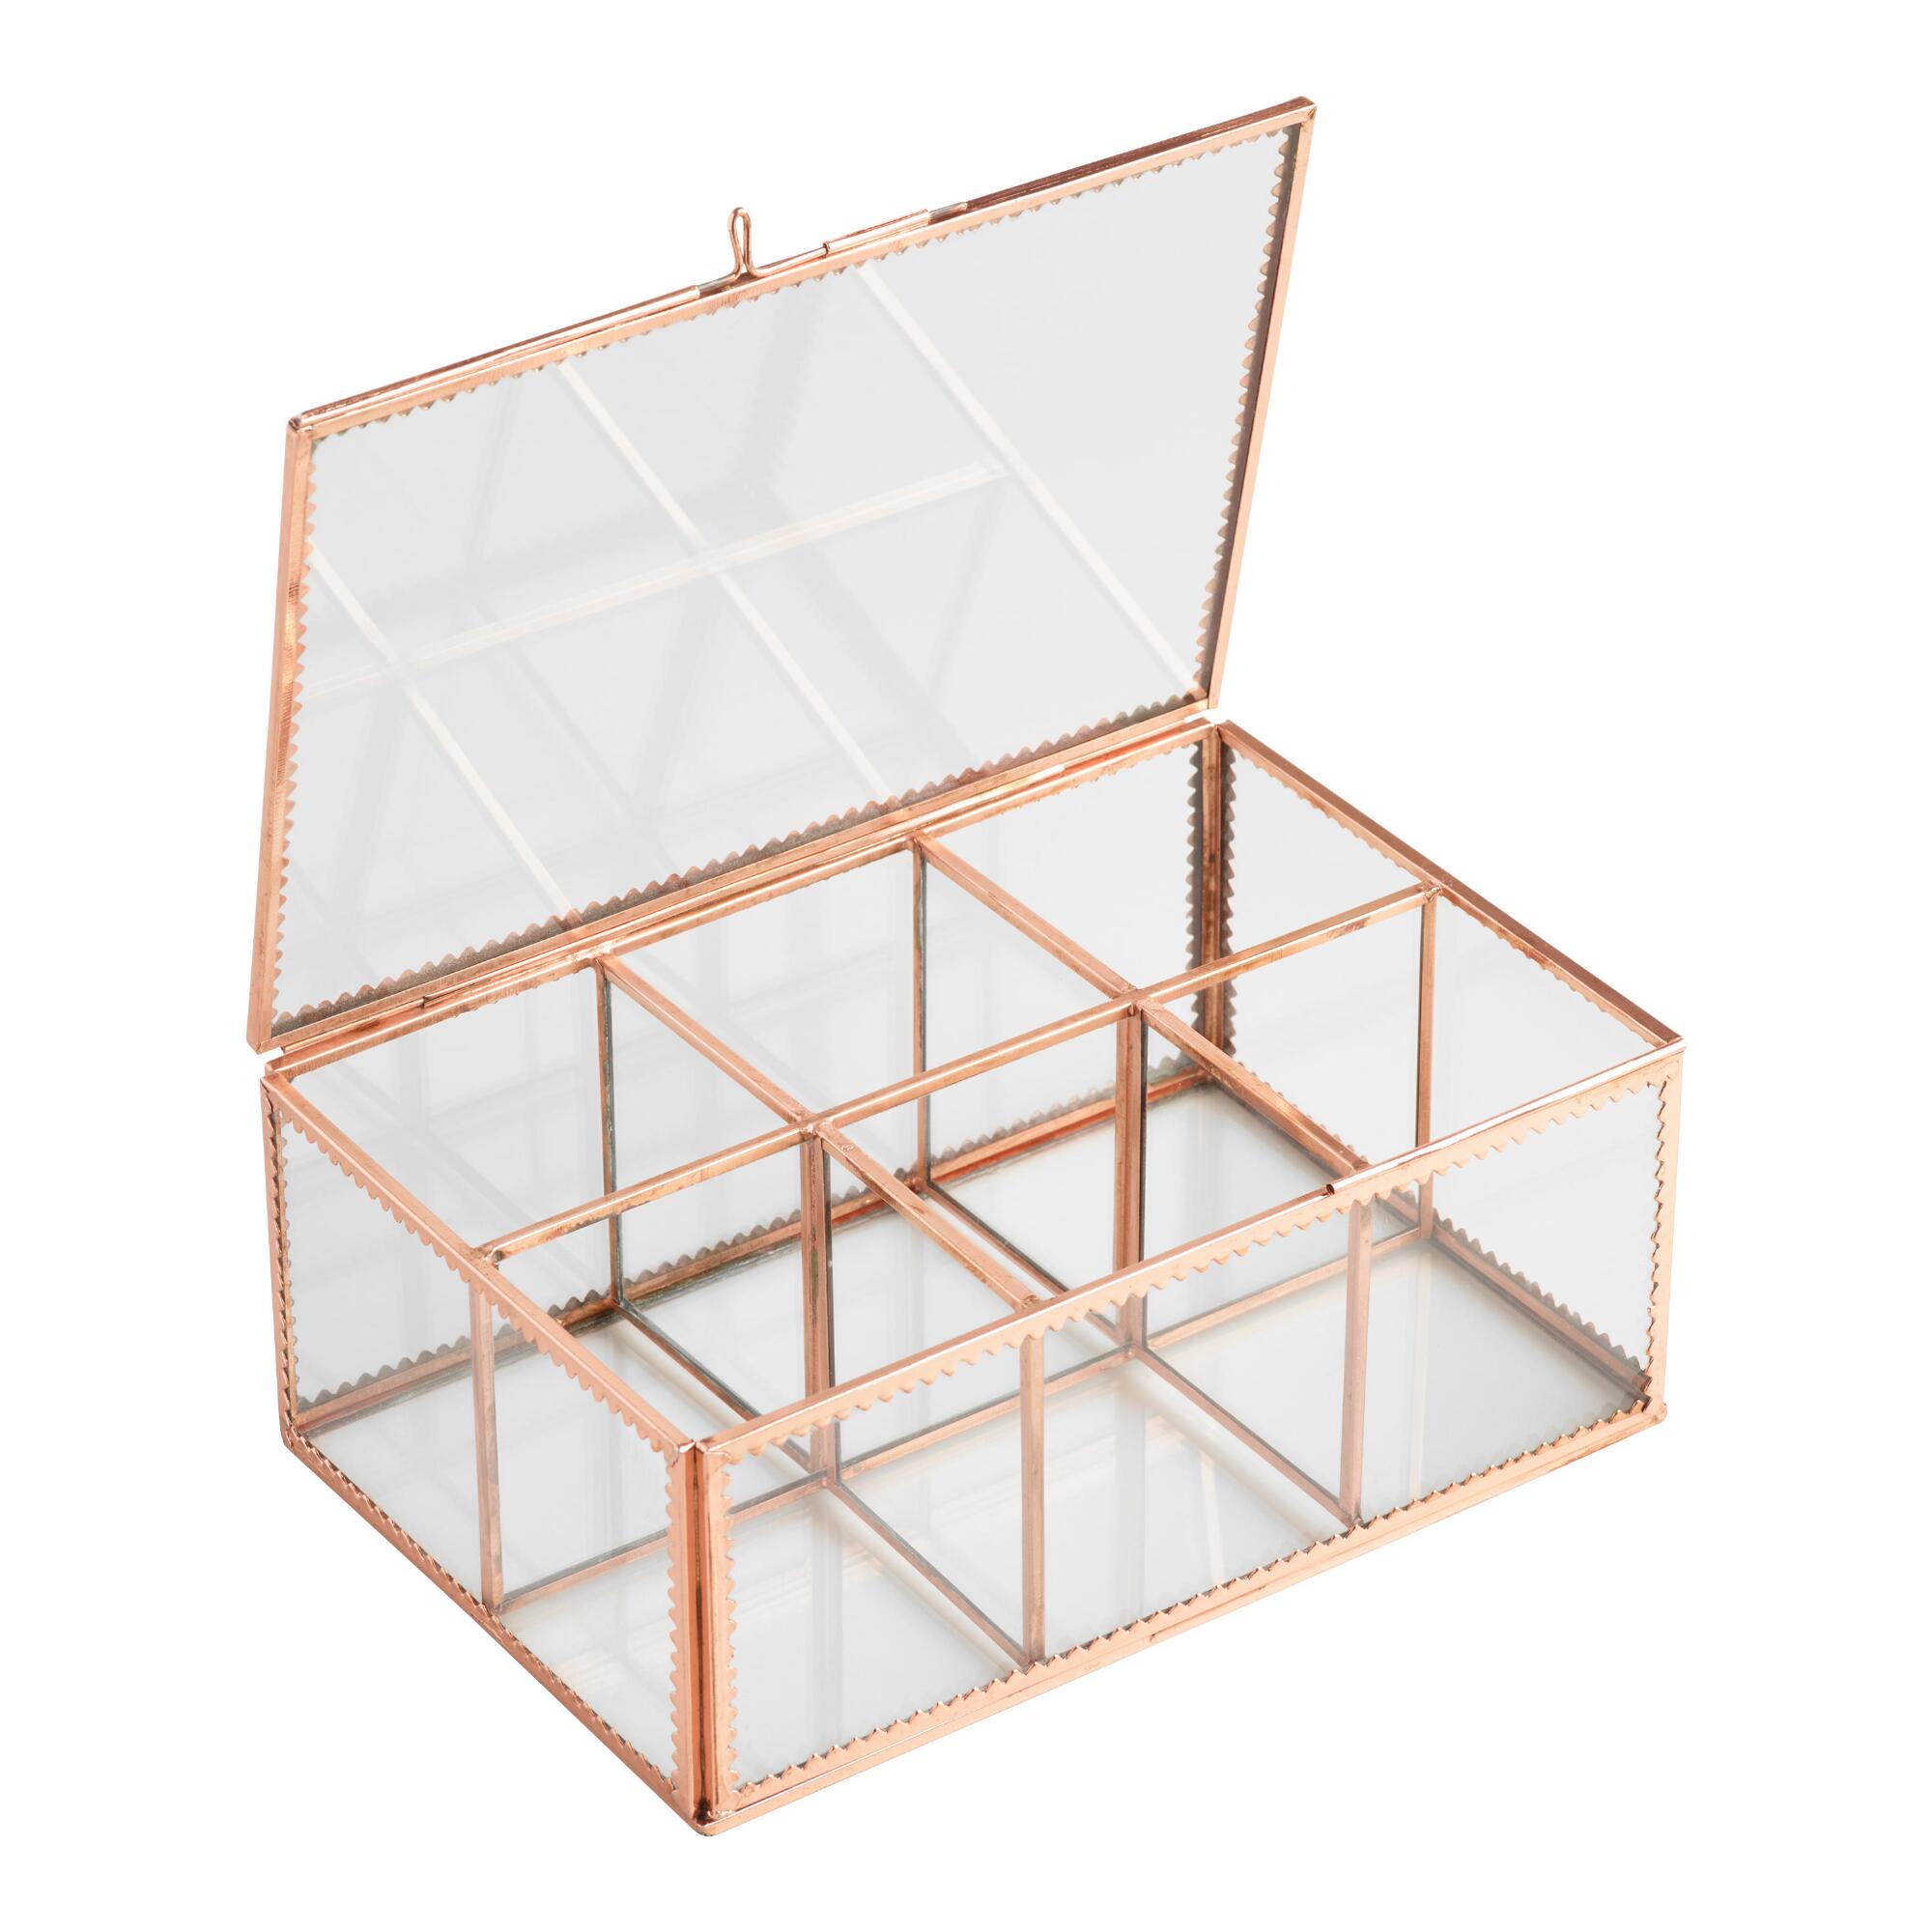 Copper and Glass Tea Storage Box by World Market